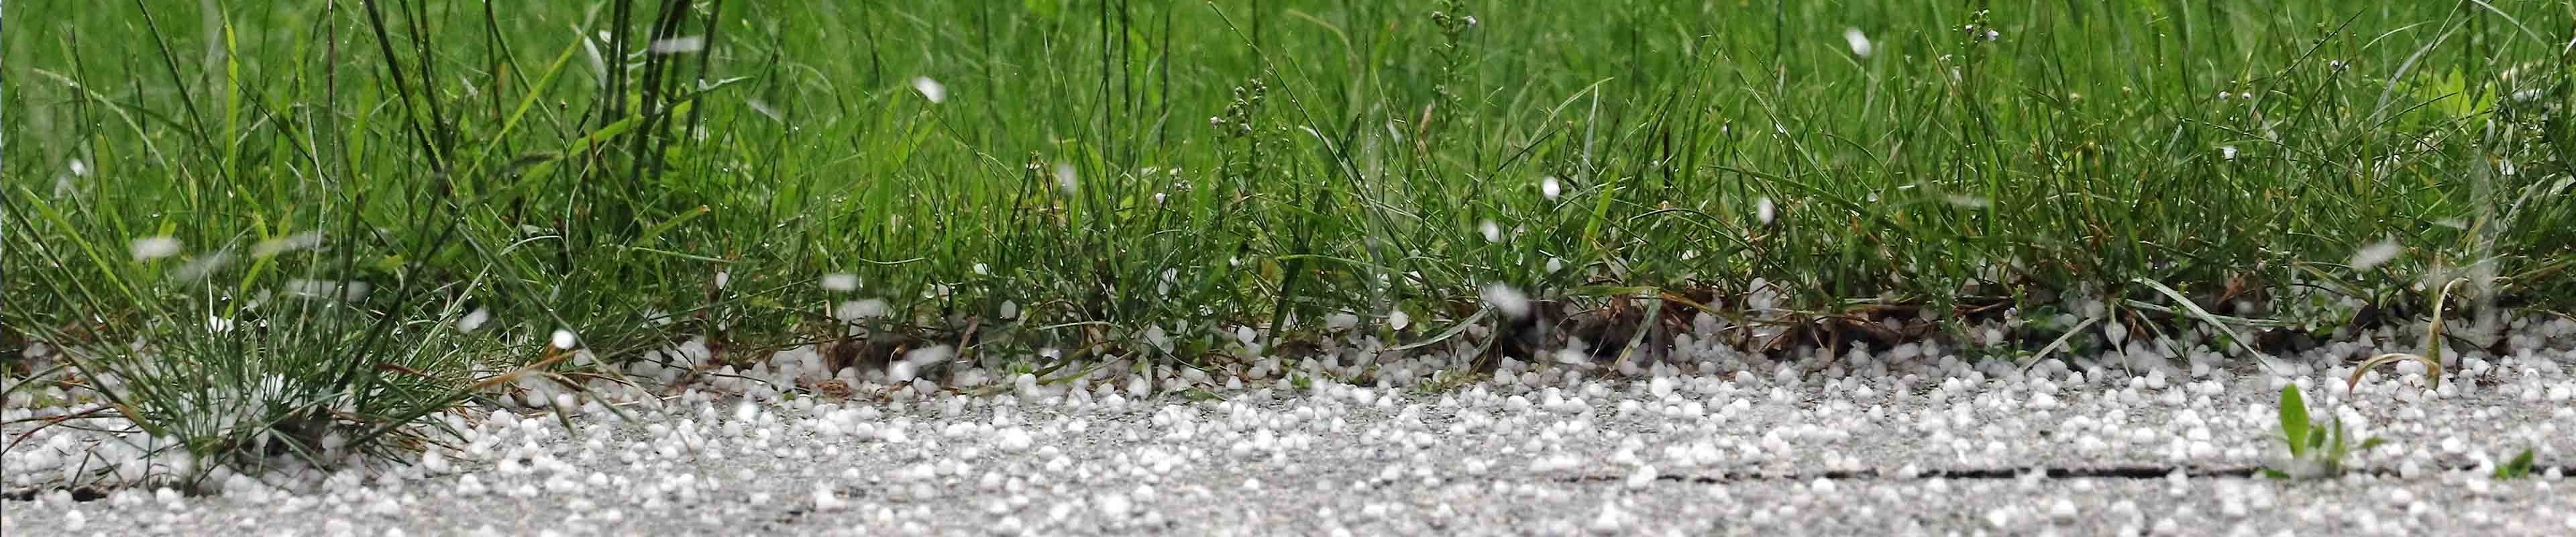 Dangerous hail falls outside during a thunderstorm. 